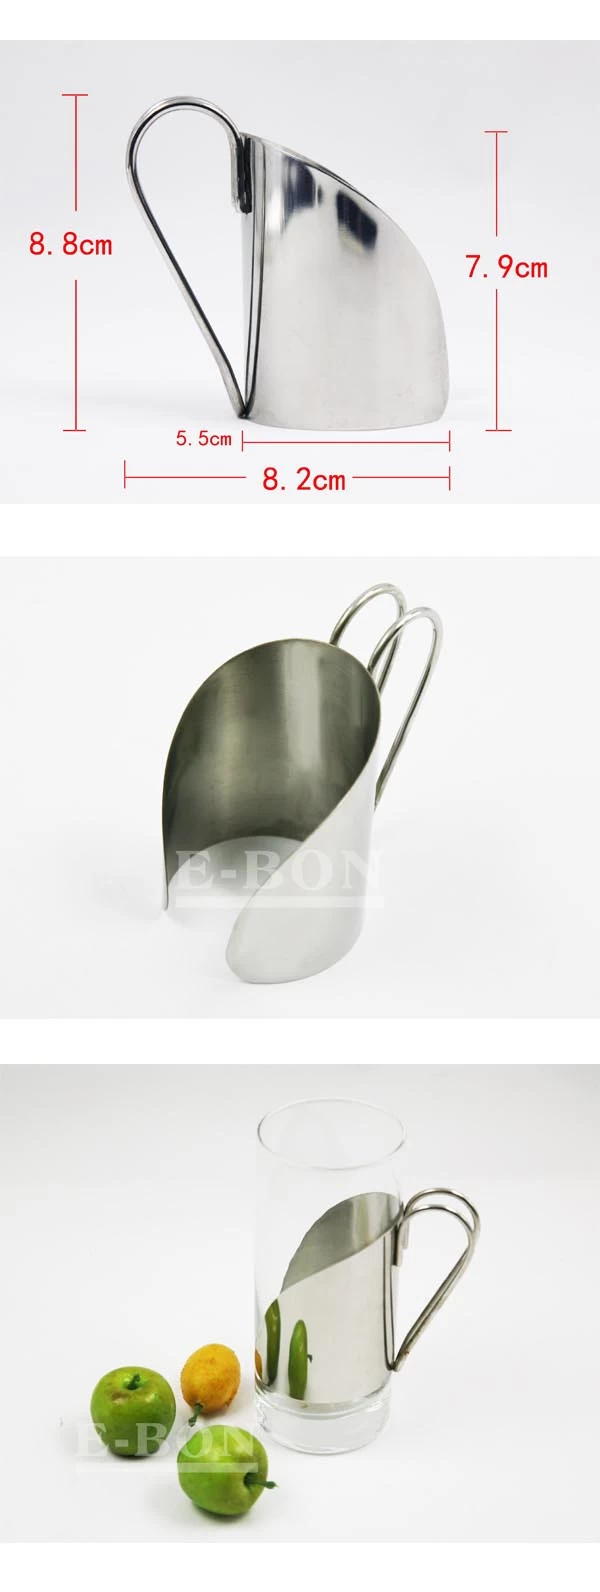 Sainless steel glass cup metal holder